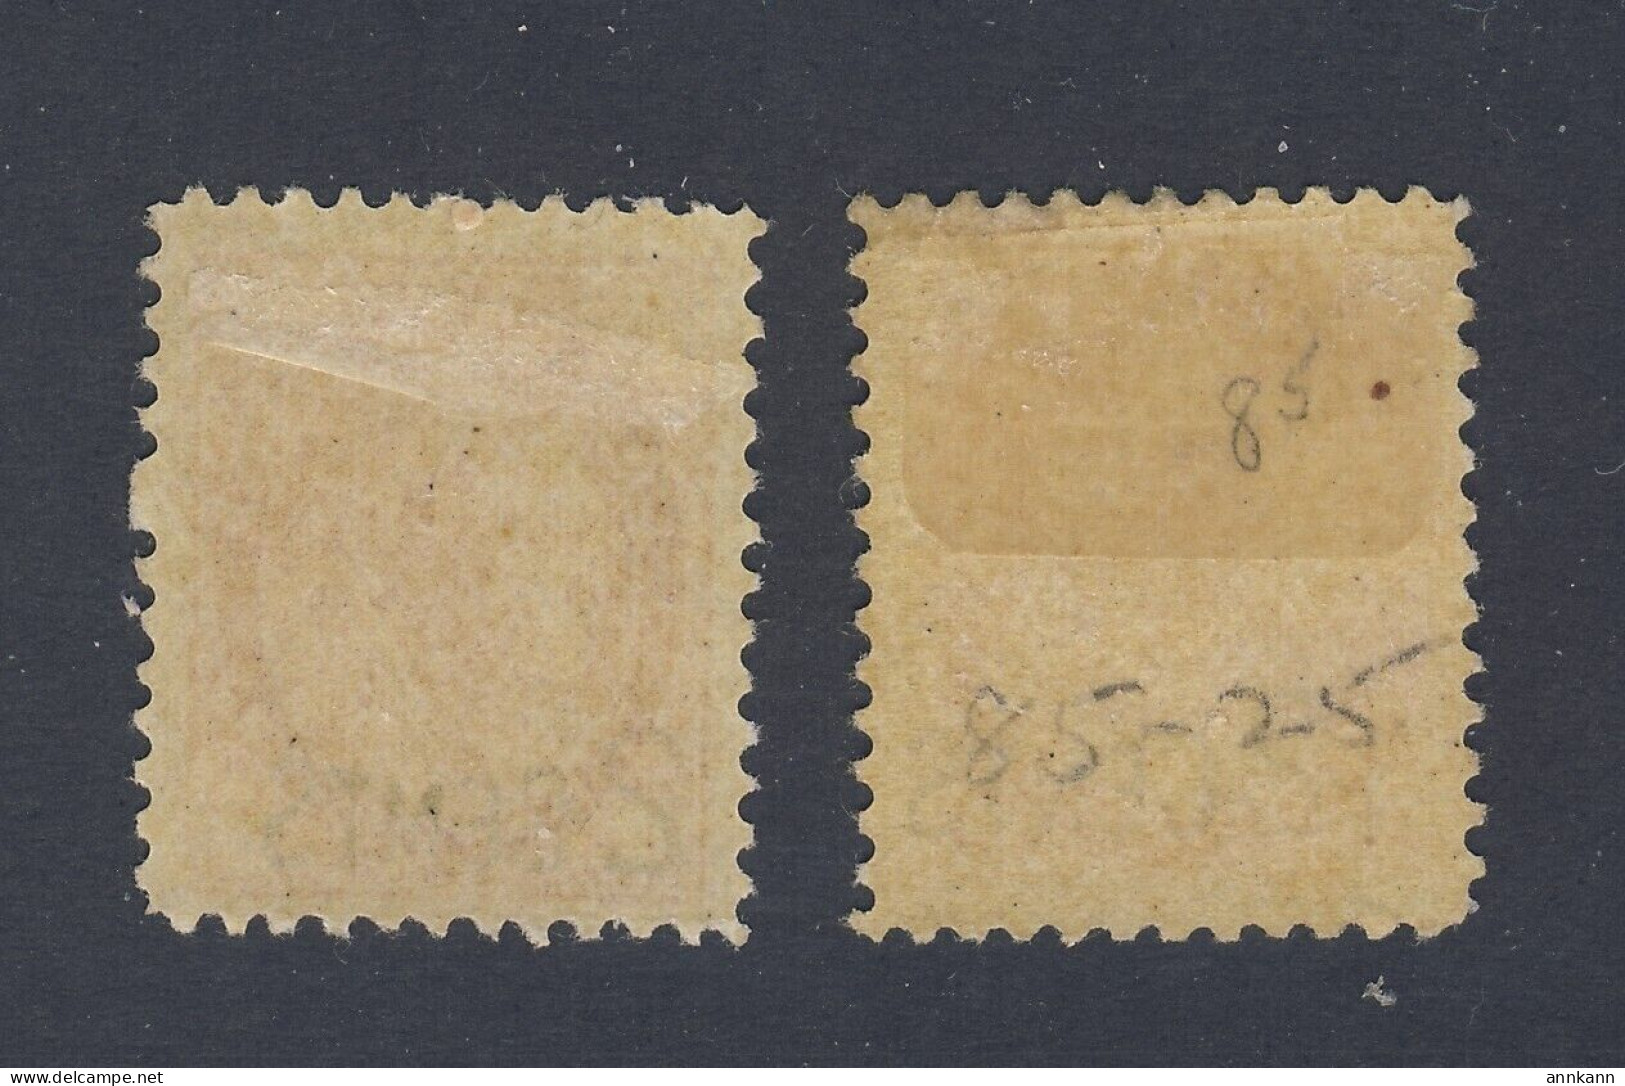 2x Canada Victoria Stamps #87/2c/3c ML & #88-2c/3c Numeral, MH GV = $50.00 - Neufs